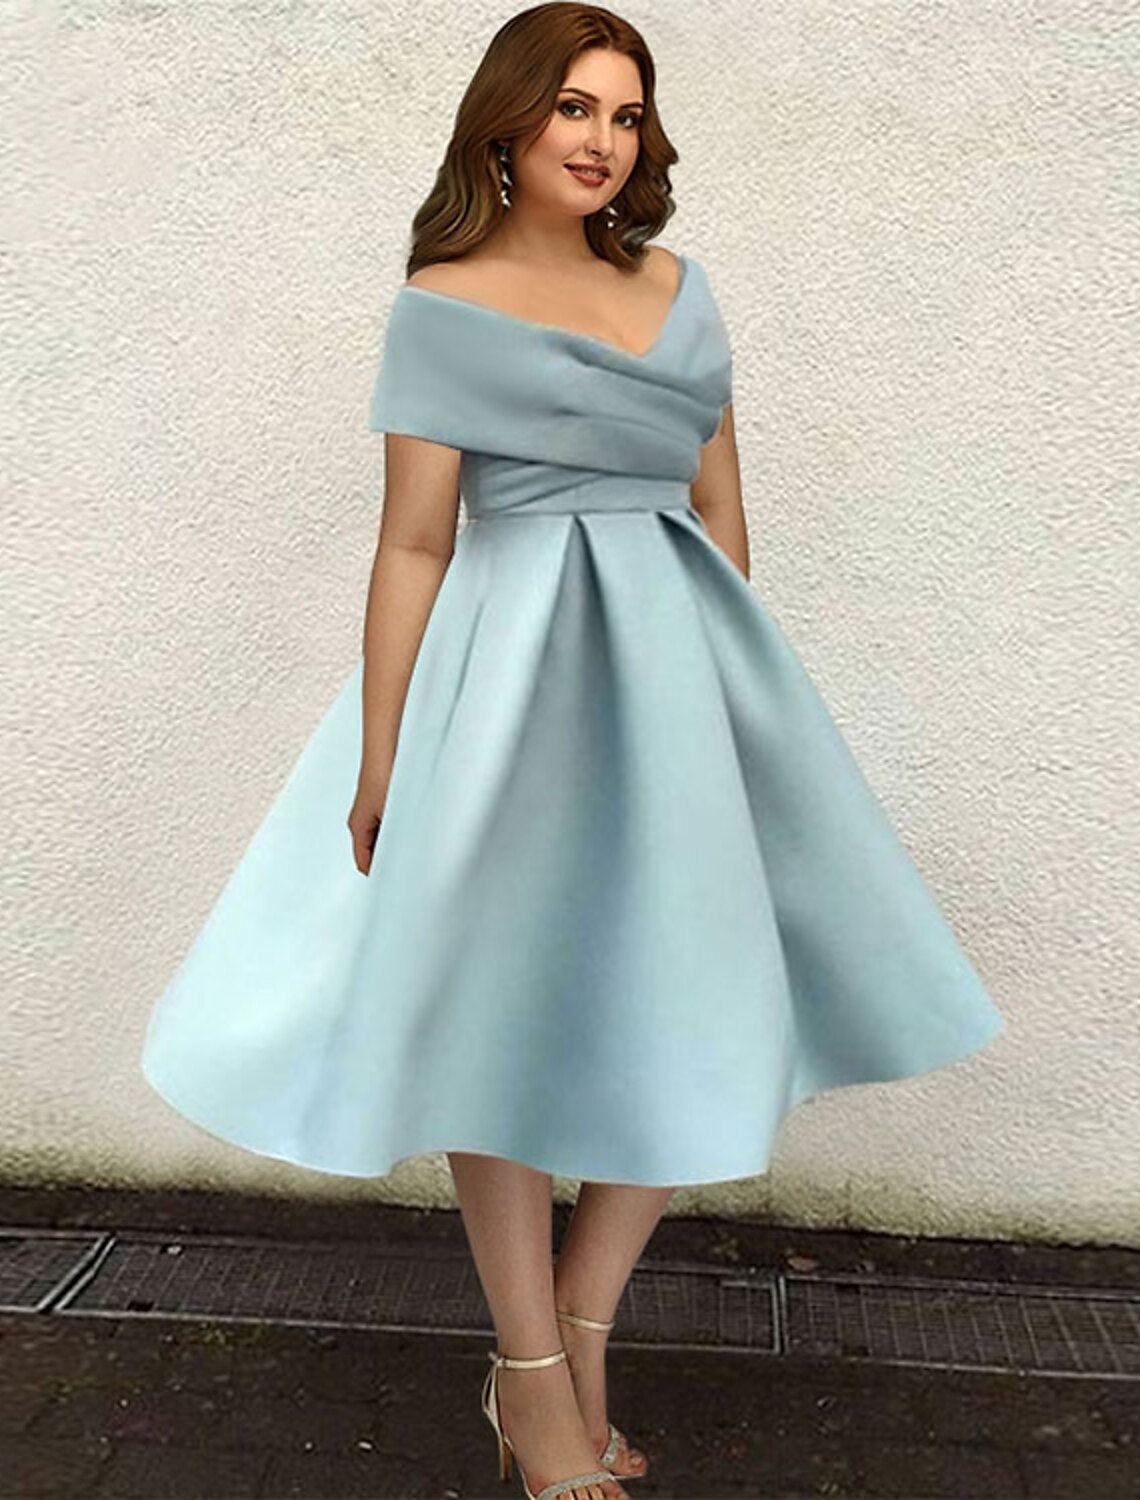 A-Line Cocktail Dresses 1950s Dress Wedding Guest Tea Length Short Sleeve V Neck Satin with Sleek Pleats Pure Color